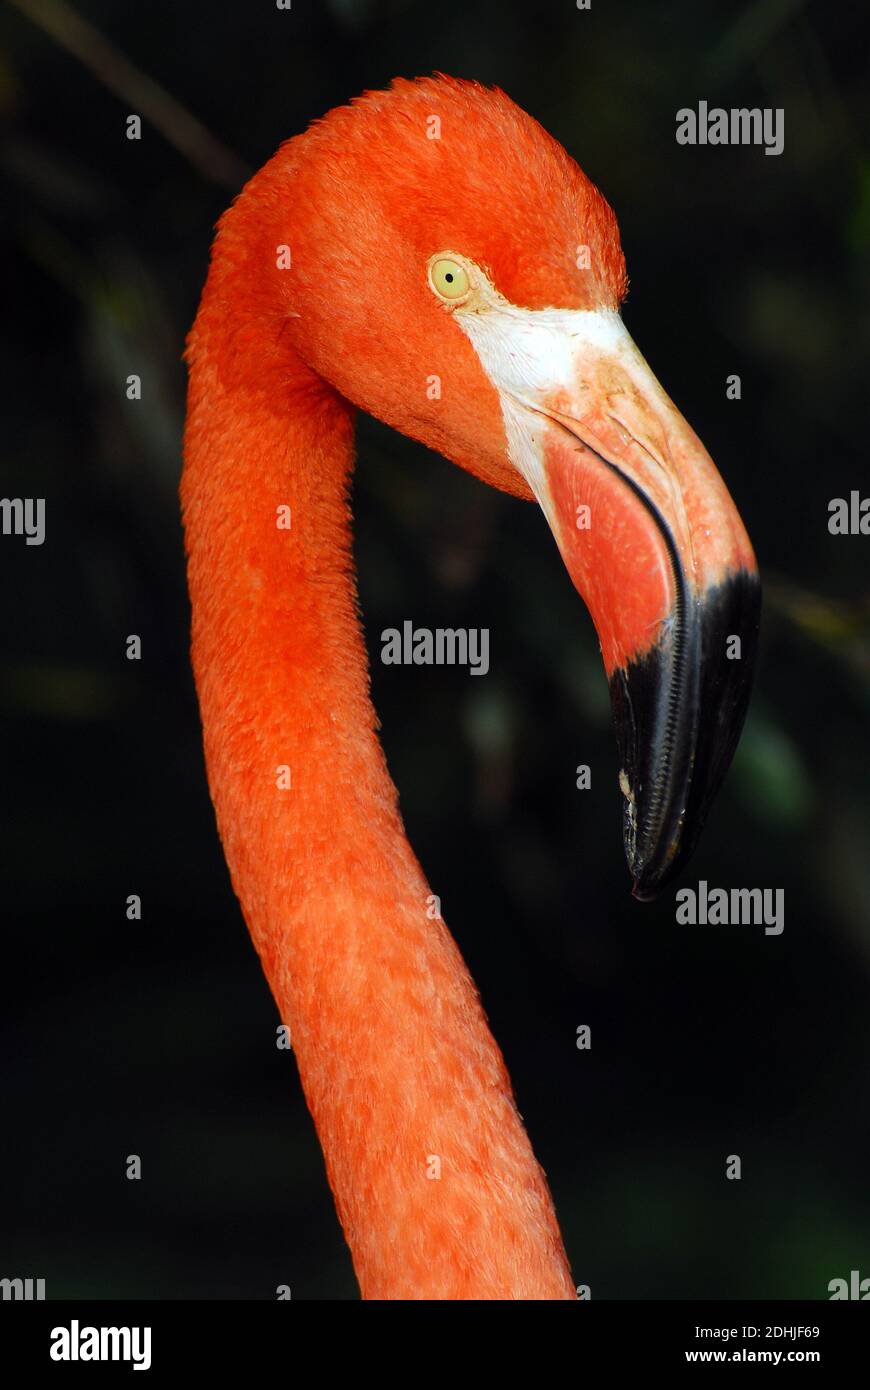 American flamingo, Caribbean flamingo, Kubaflamingo, Flamant des Caraïbes, Phoenicopterus ruber, karibi flamingó Stock Photo